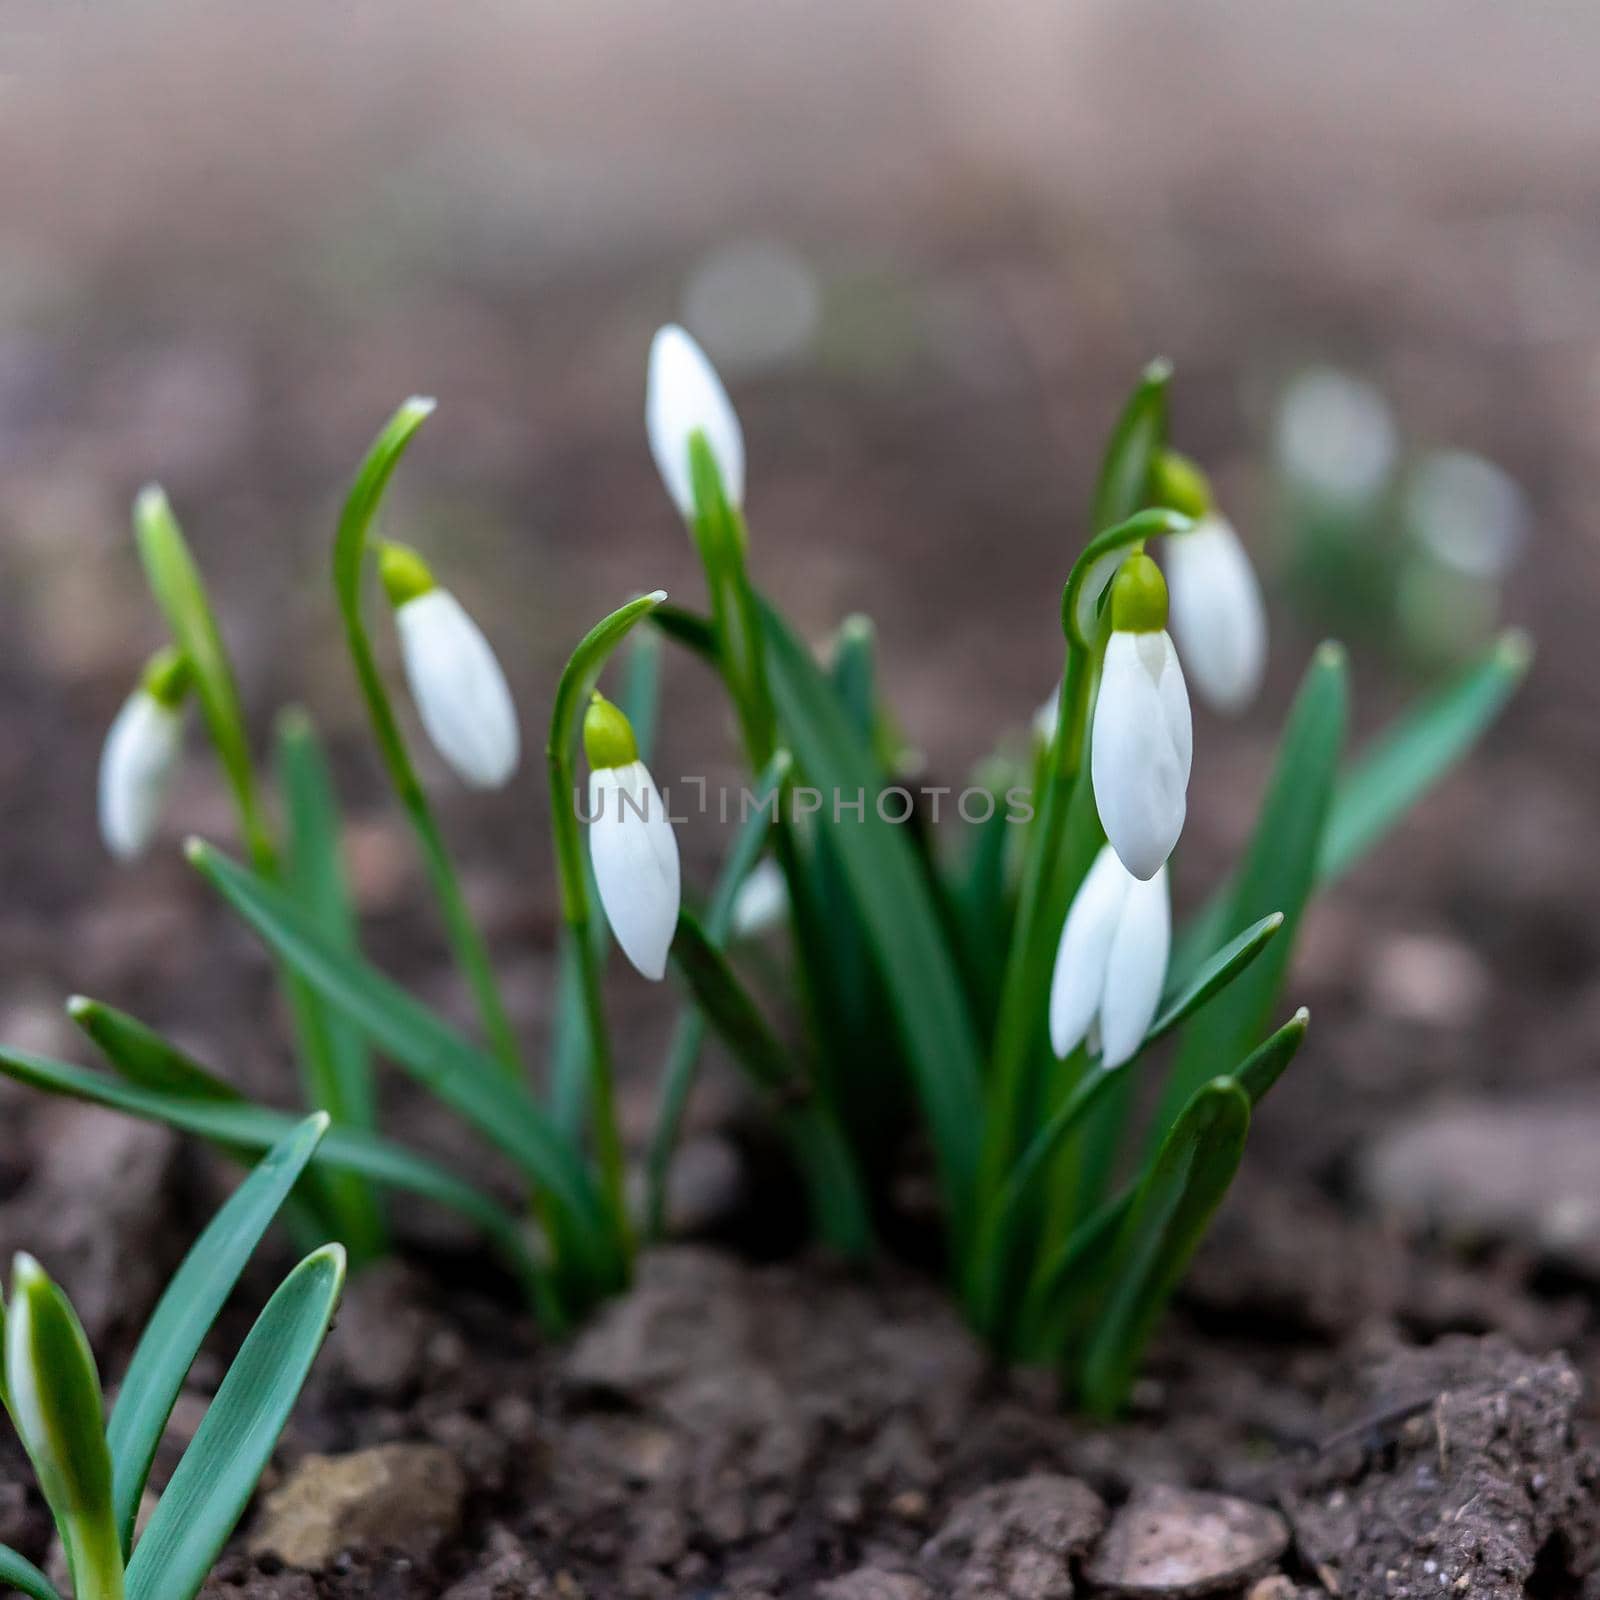 Symbol of spring awakening. The first spring flowers of snowdrops. by Serhii_Voroshchuk